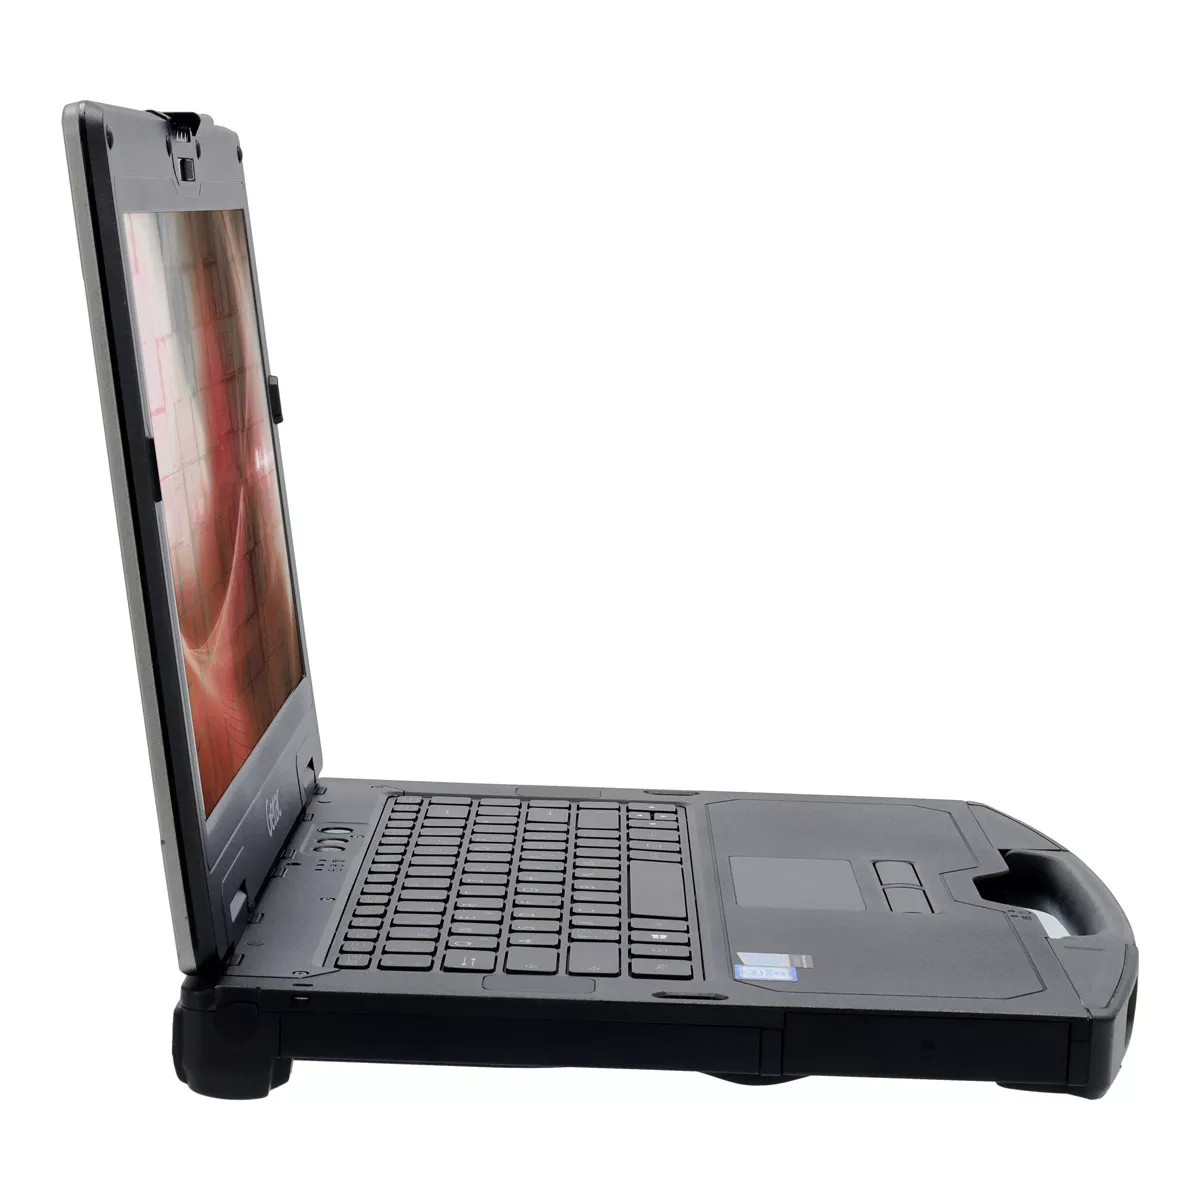 Outdoor Notebook Getac S410 Core i5 6300U 16 GB 1 TB SSD Webcam B